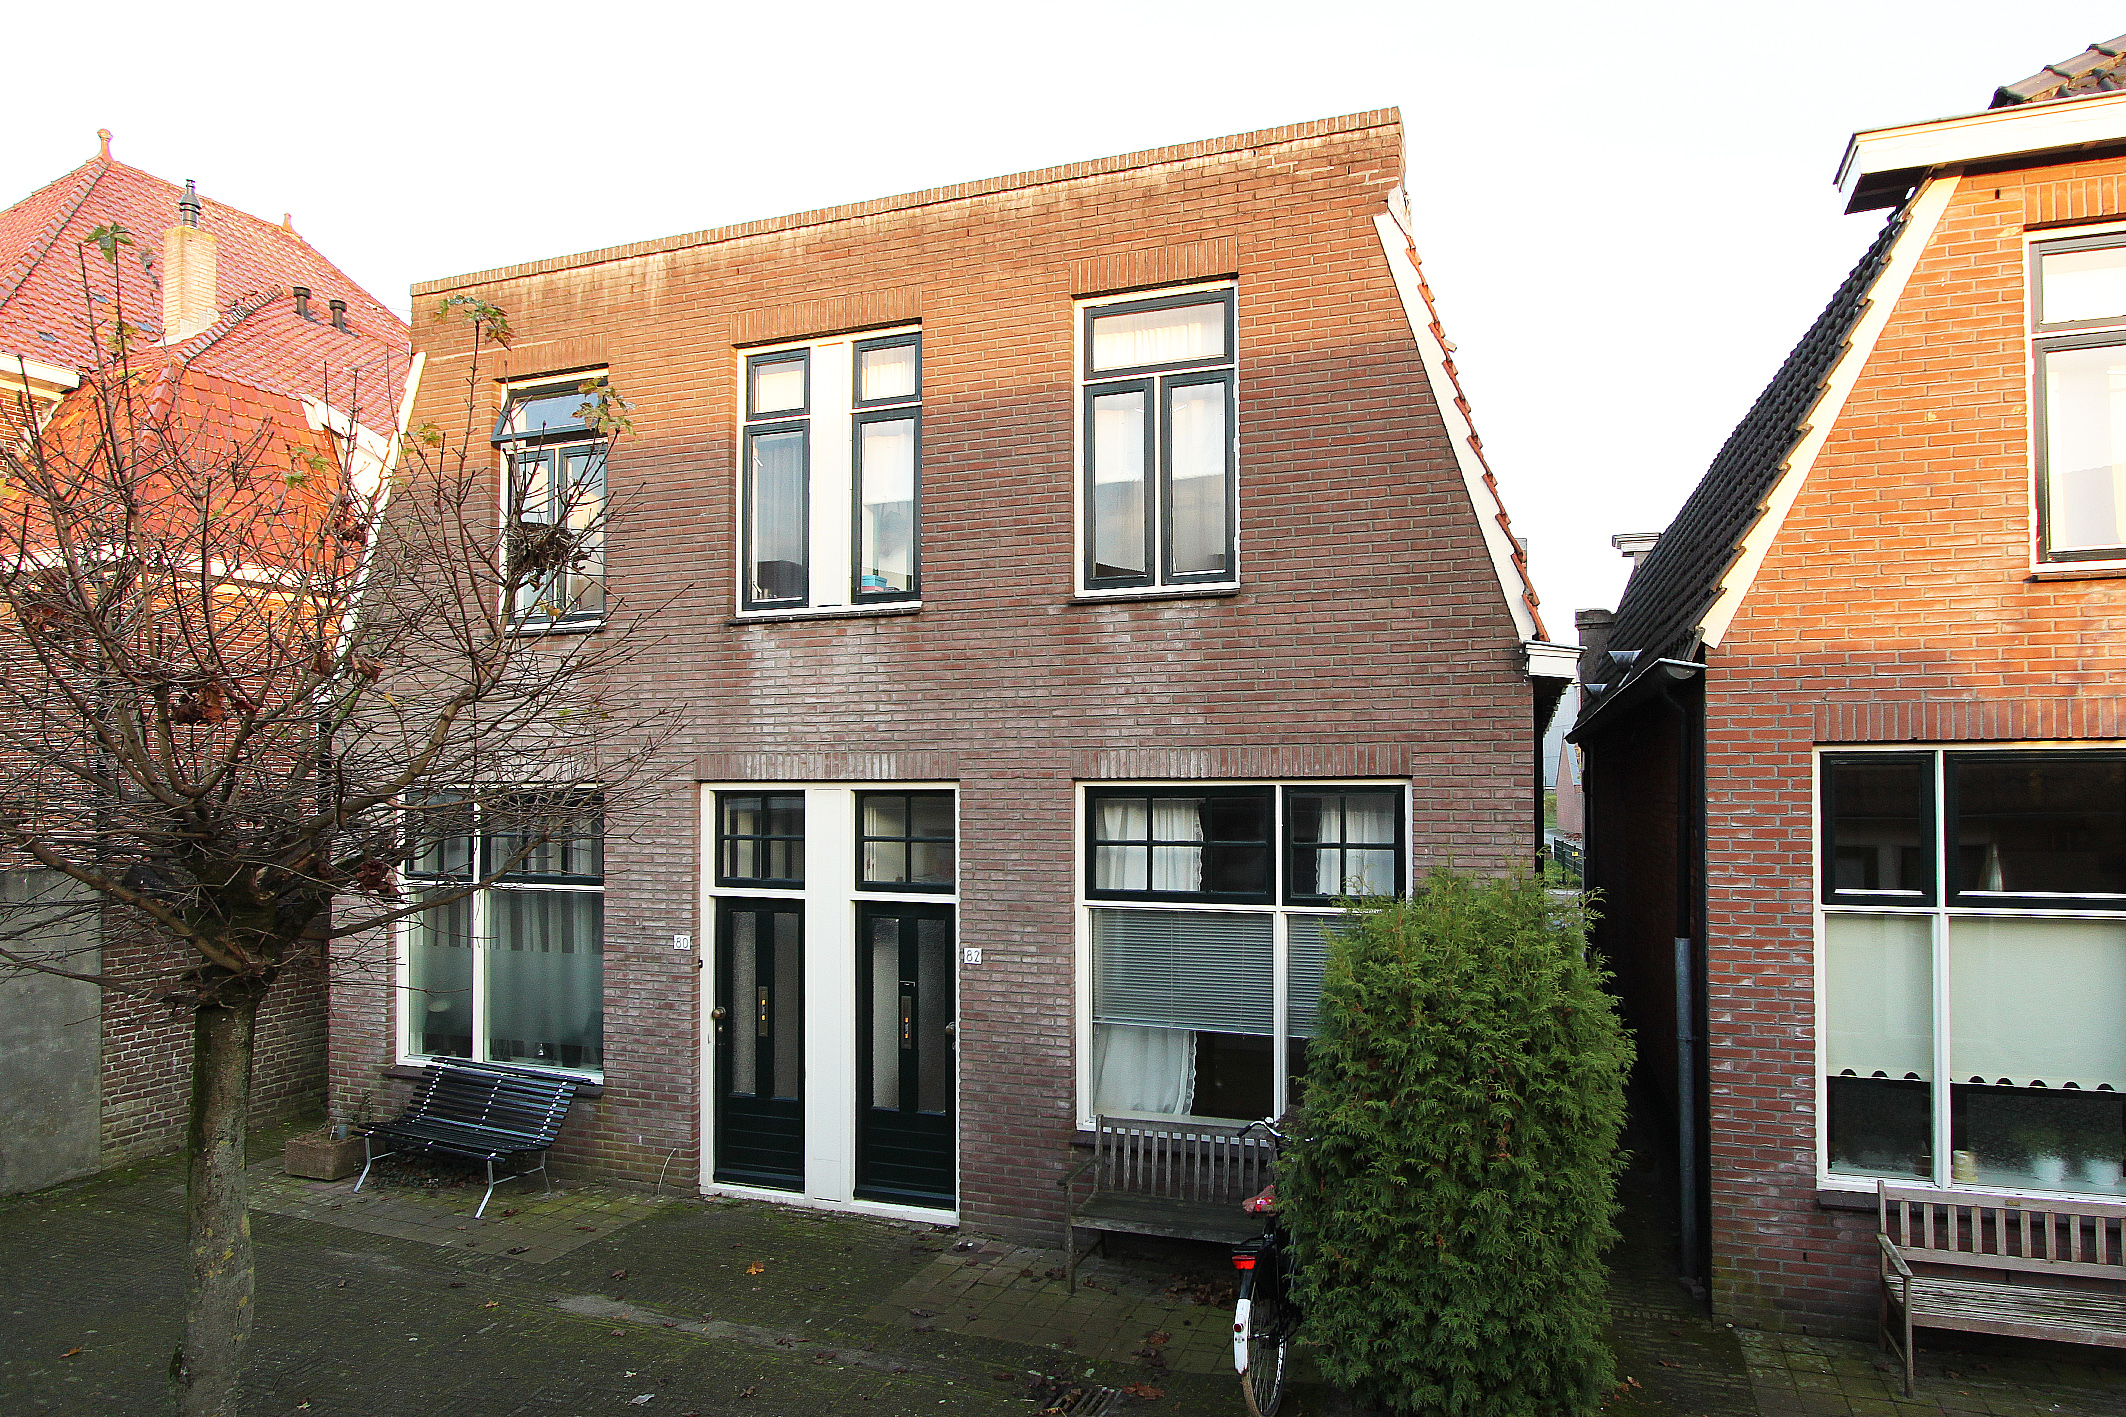 Steenstraat 82, 7571 BL Oldenzaal, Nederland